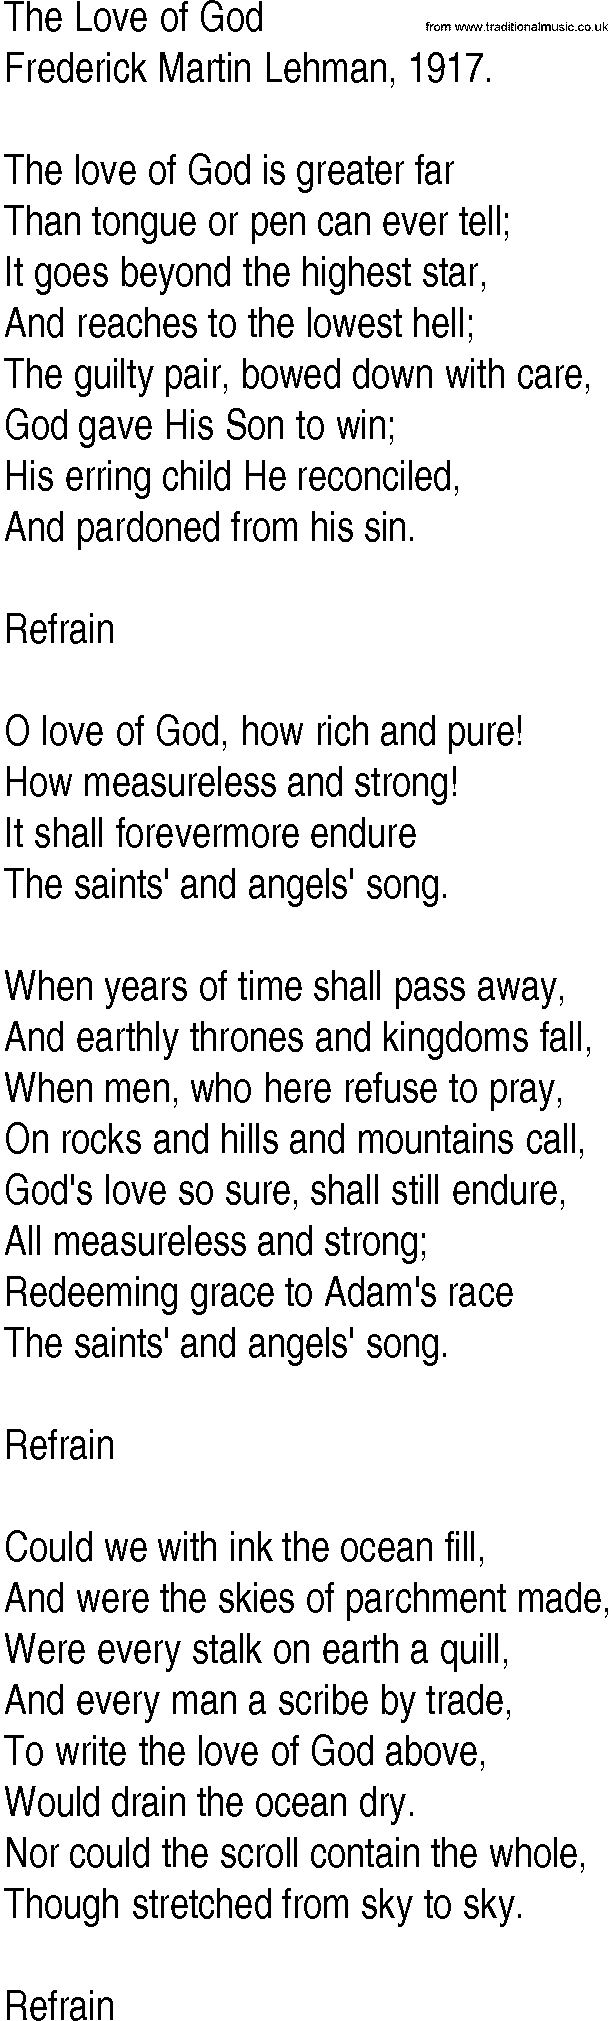 Hymn and Gospel Song: The Love of God by Frederick Martin Lehman lyrics